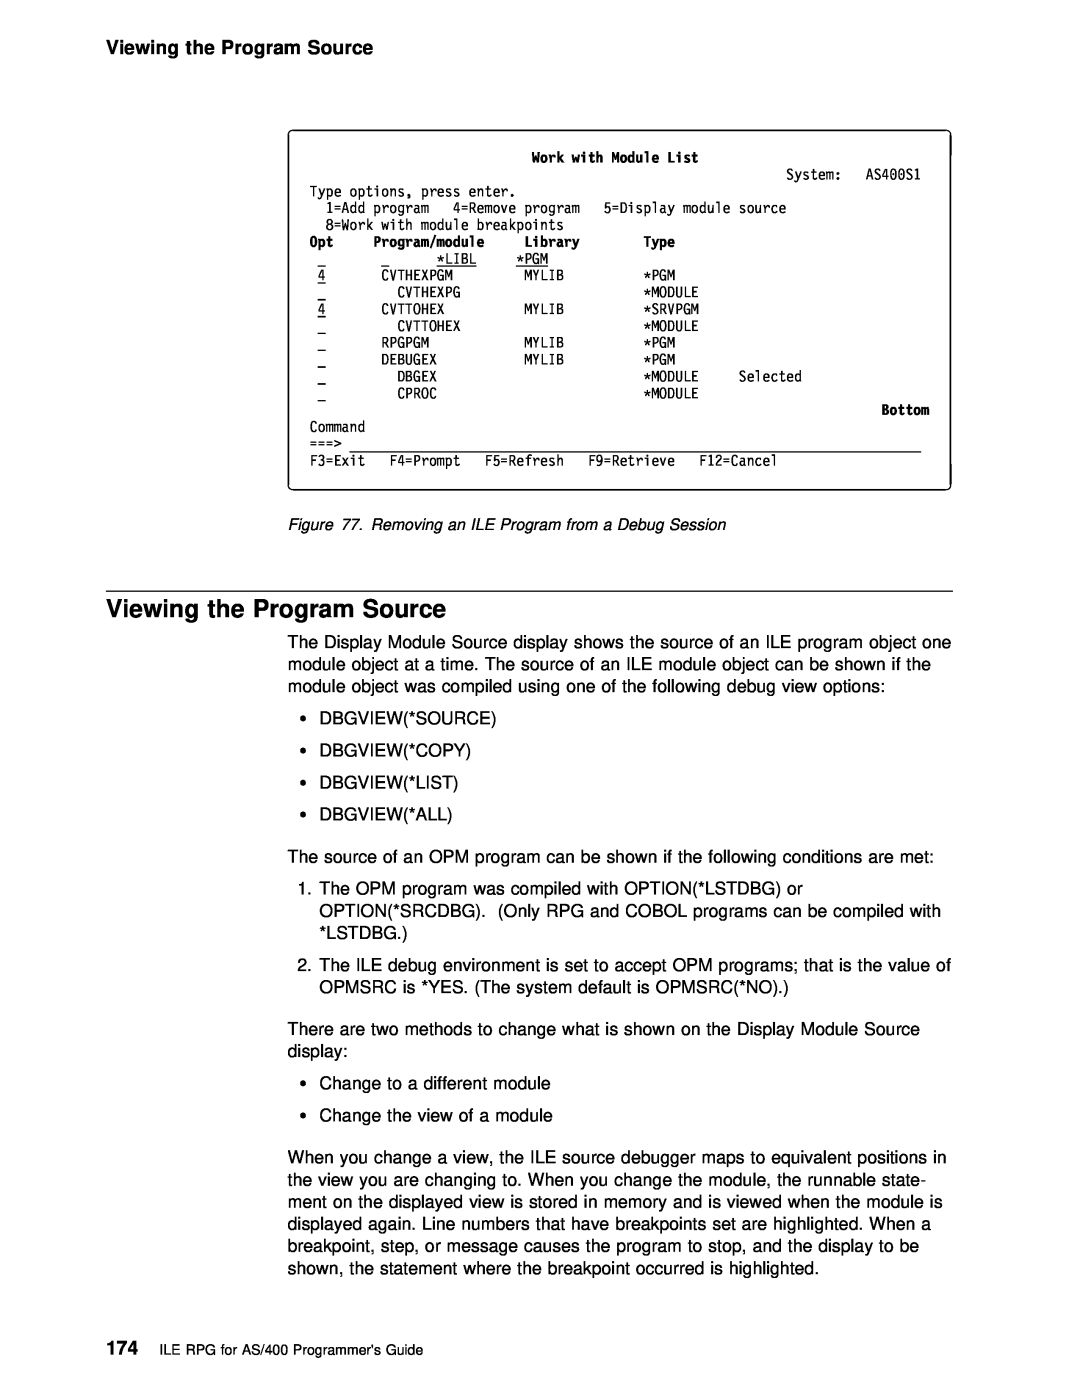 IBM AS/400 manual Viewing the Program Source 